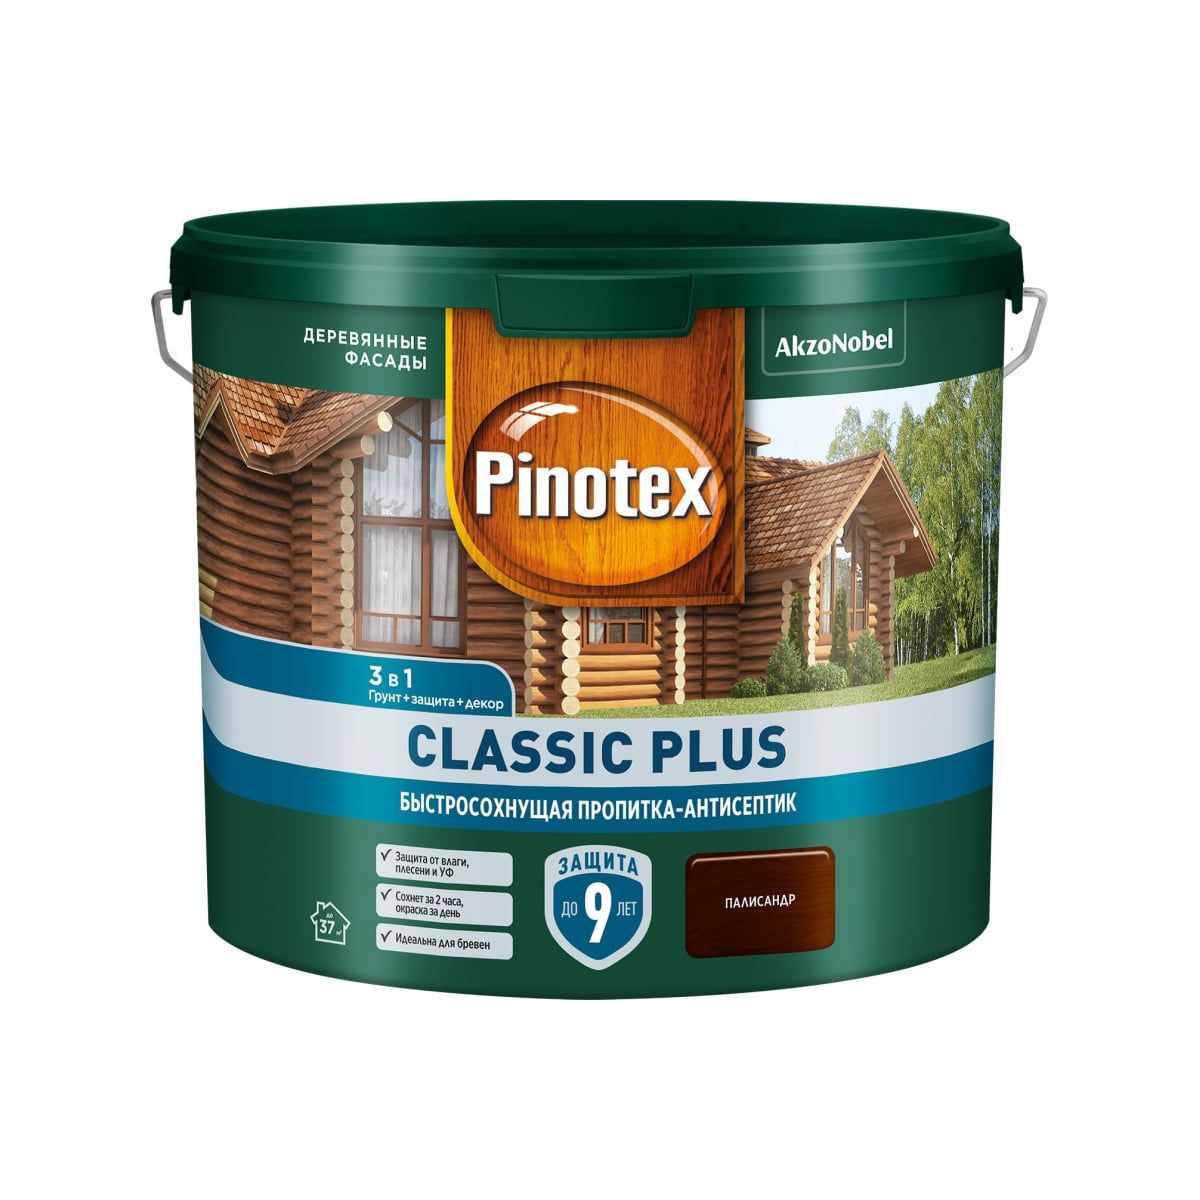 Пропитка-антисептик Pinotex Classic Plus 3 в 1,быстросохнущая, палисандр, 2,5 л